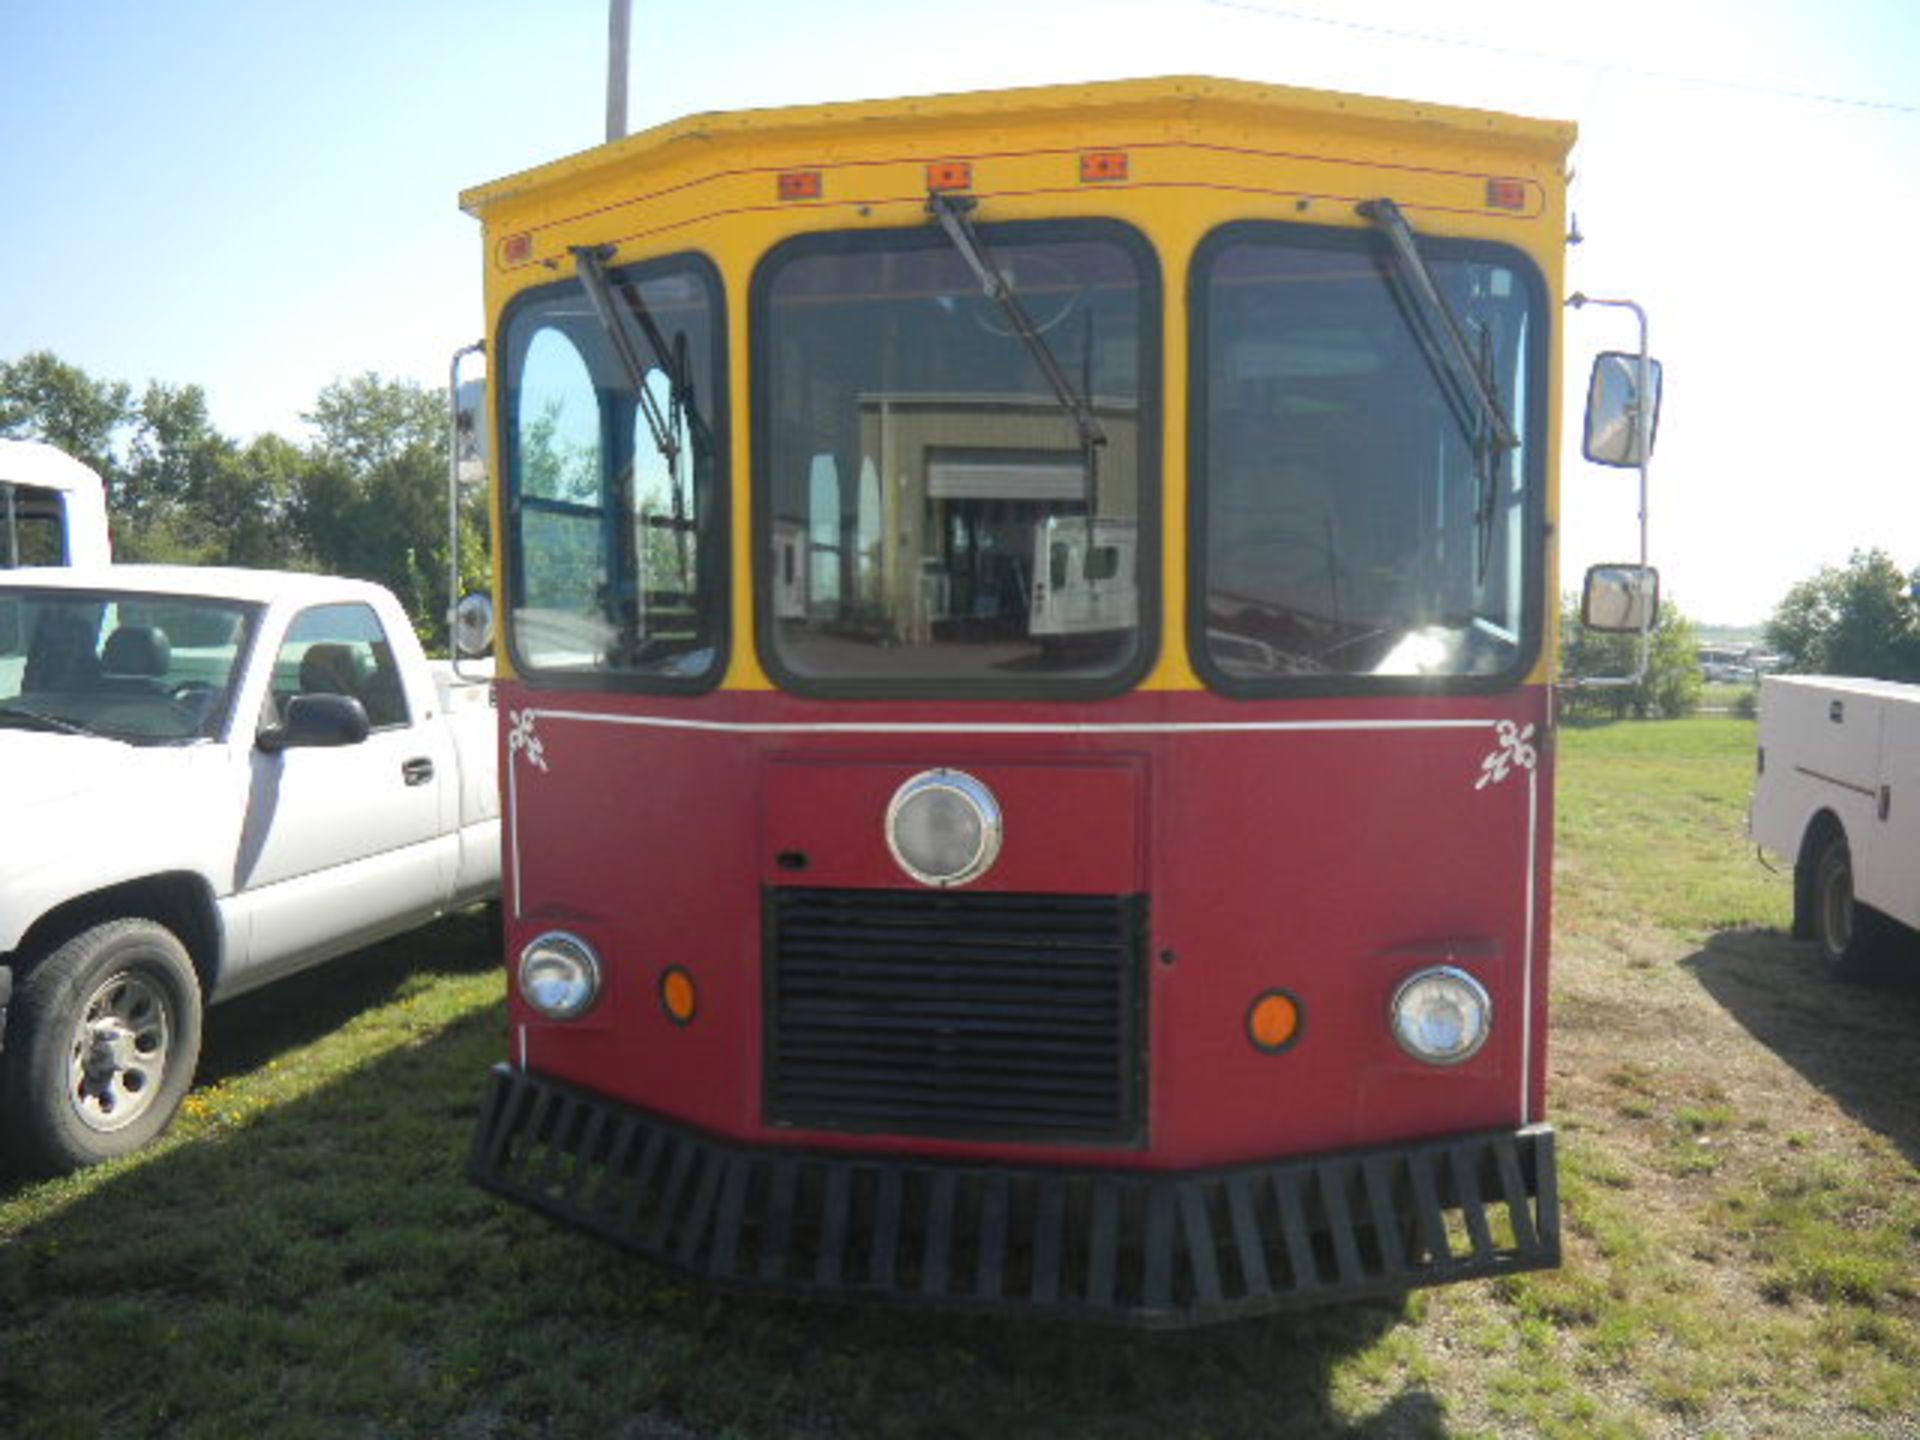 Trolley Bus - Asset I.D. #659 - Last of Vin (T2112598) - Freightliner Chassis - Cummins Diesel - Image 3 of 10